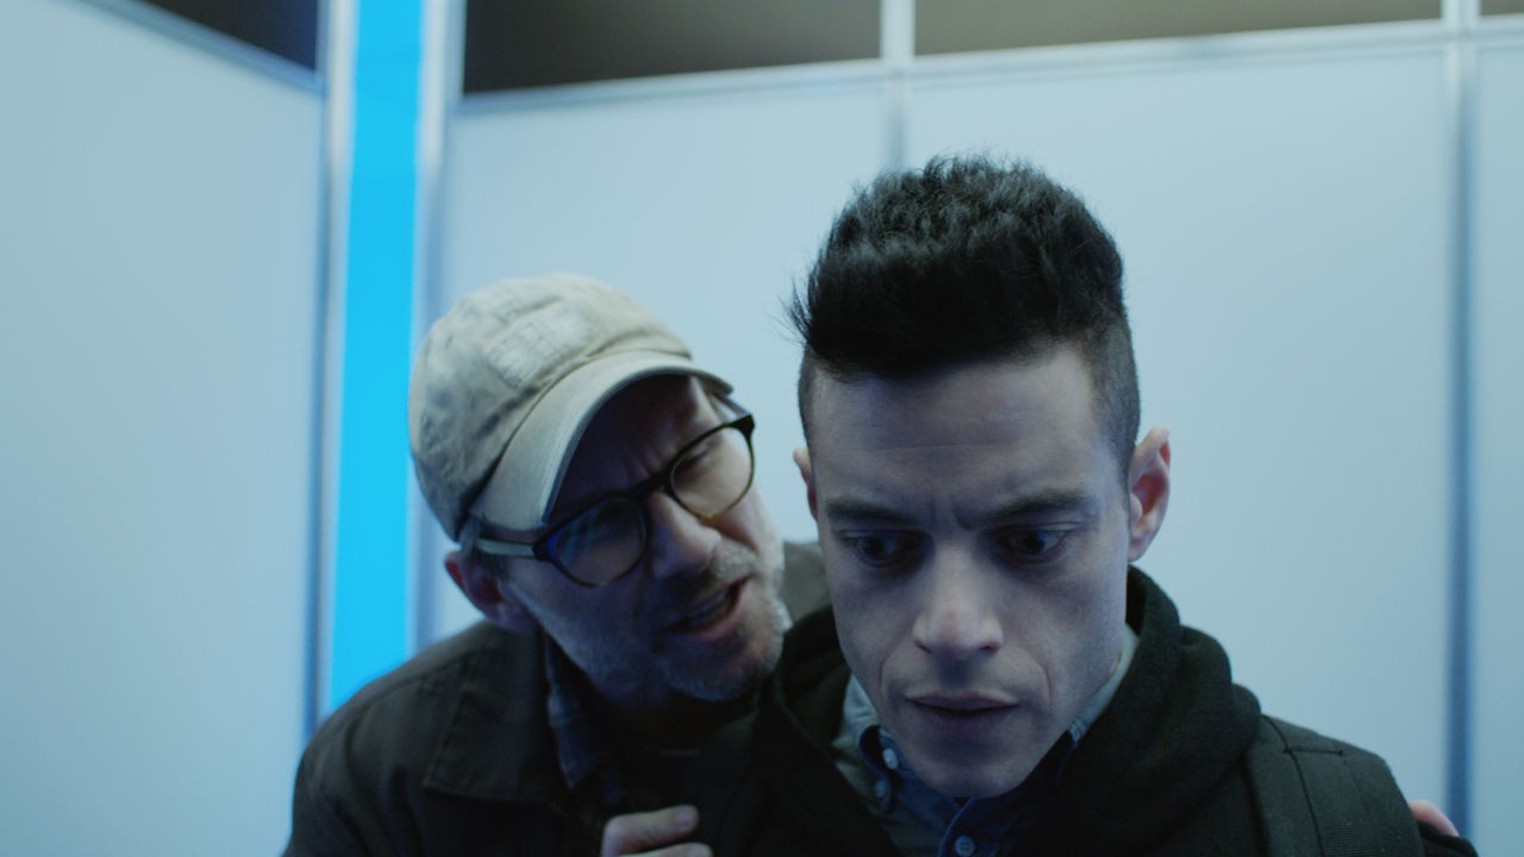 Mr. Robot - Rami Malek as Elliot Alderson